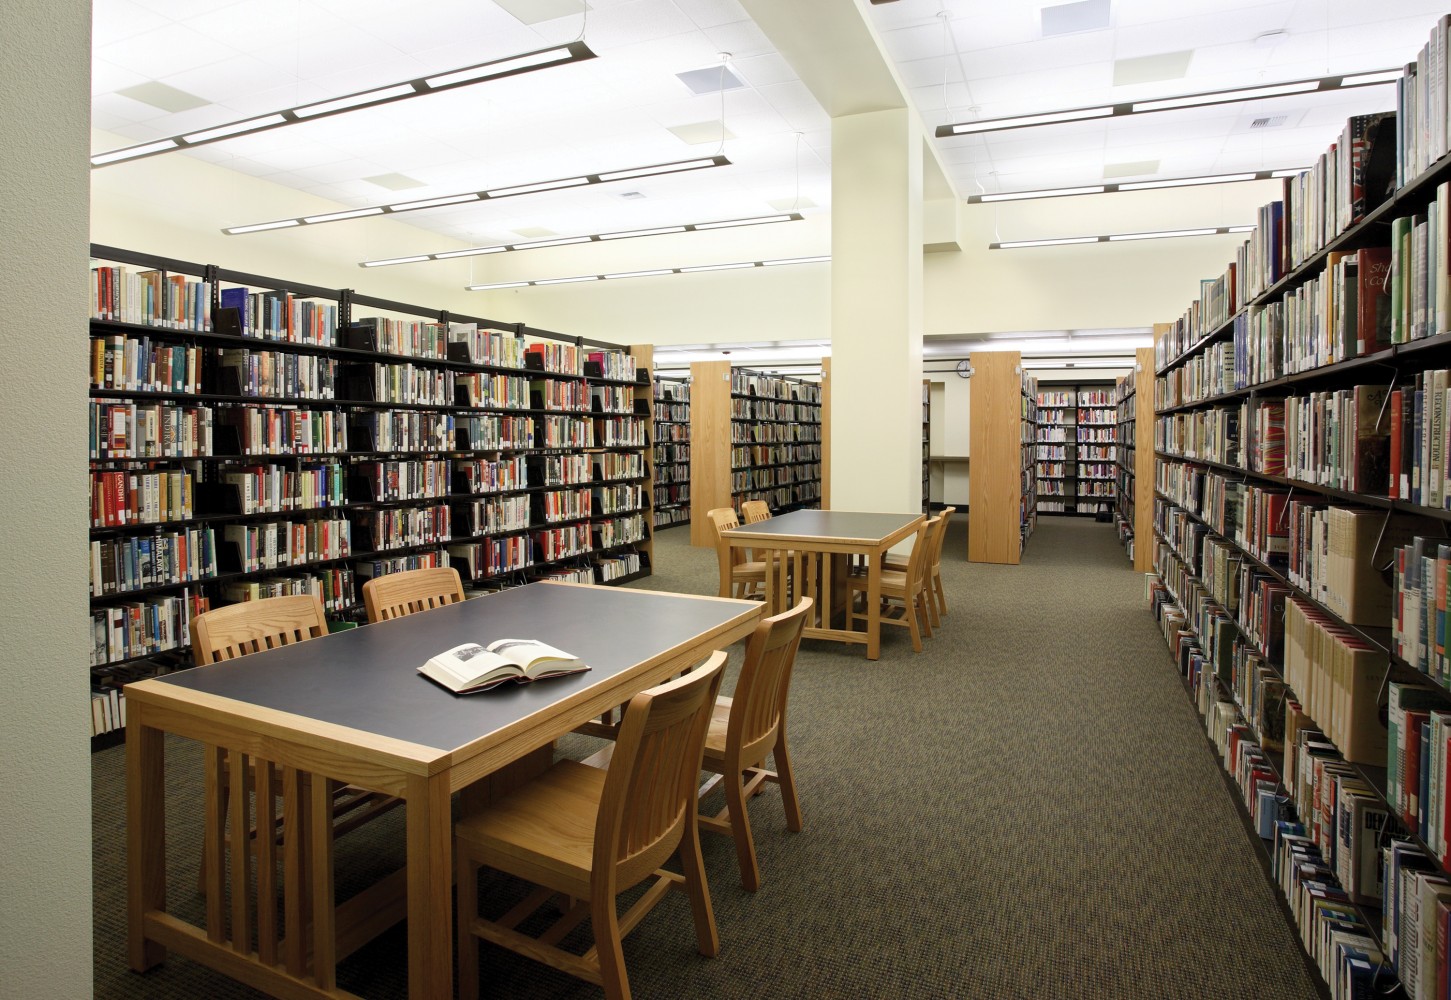 Библиотека 22 2. Библиотека в американской школе. Школьная библиотека в Америке. Современная библиотека в школе. Книгохранилище в школе.